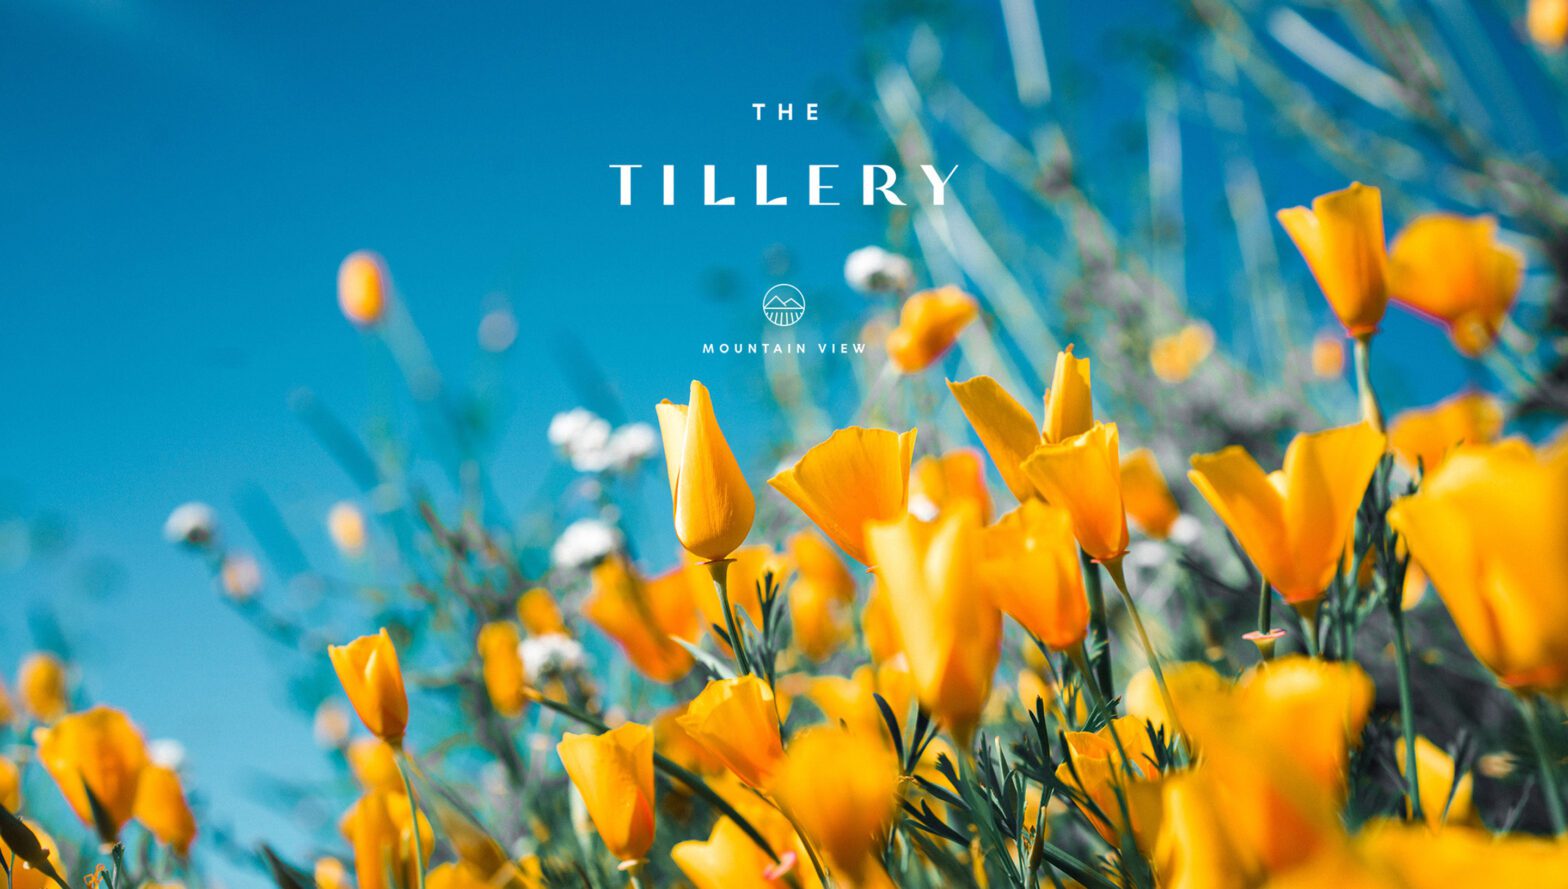 The Tillery